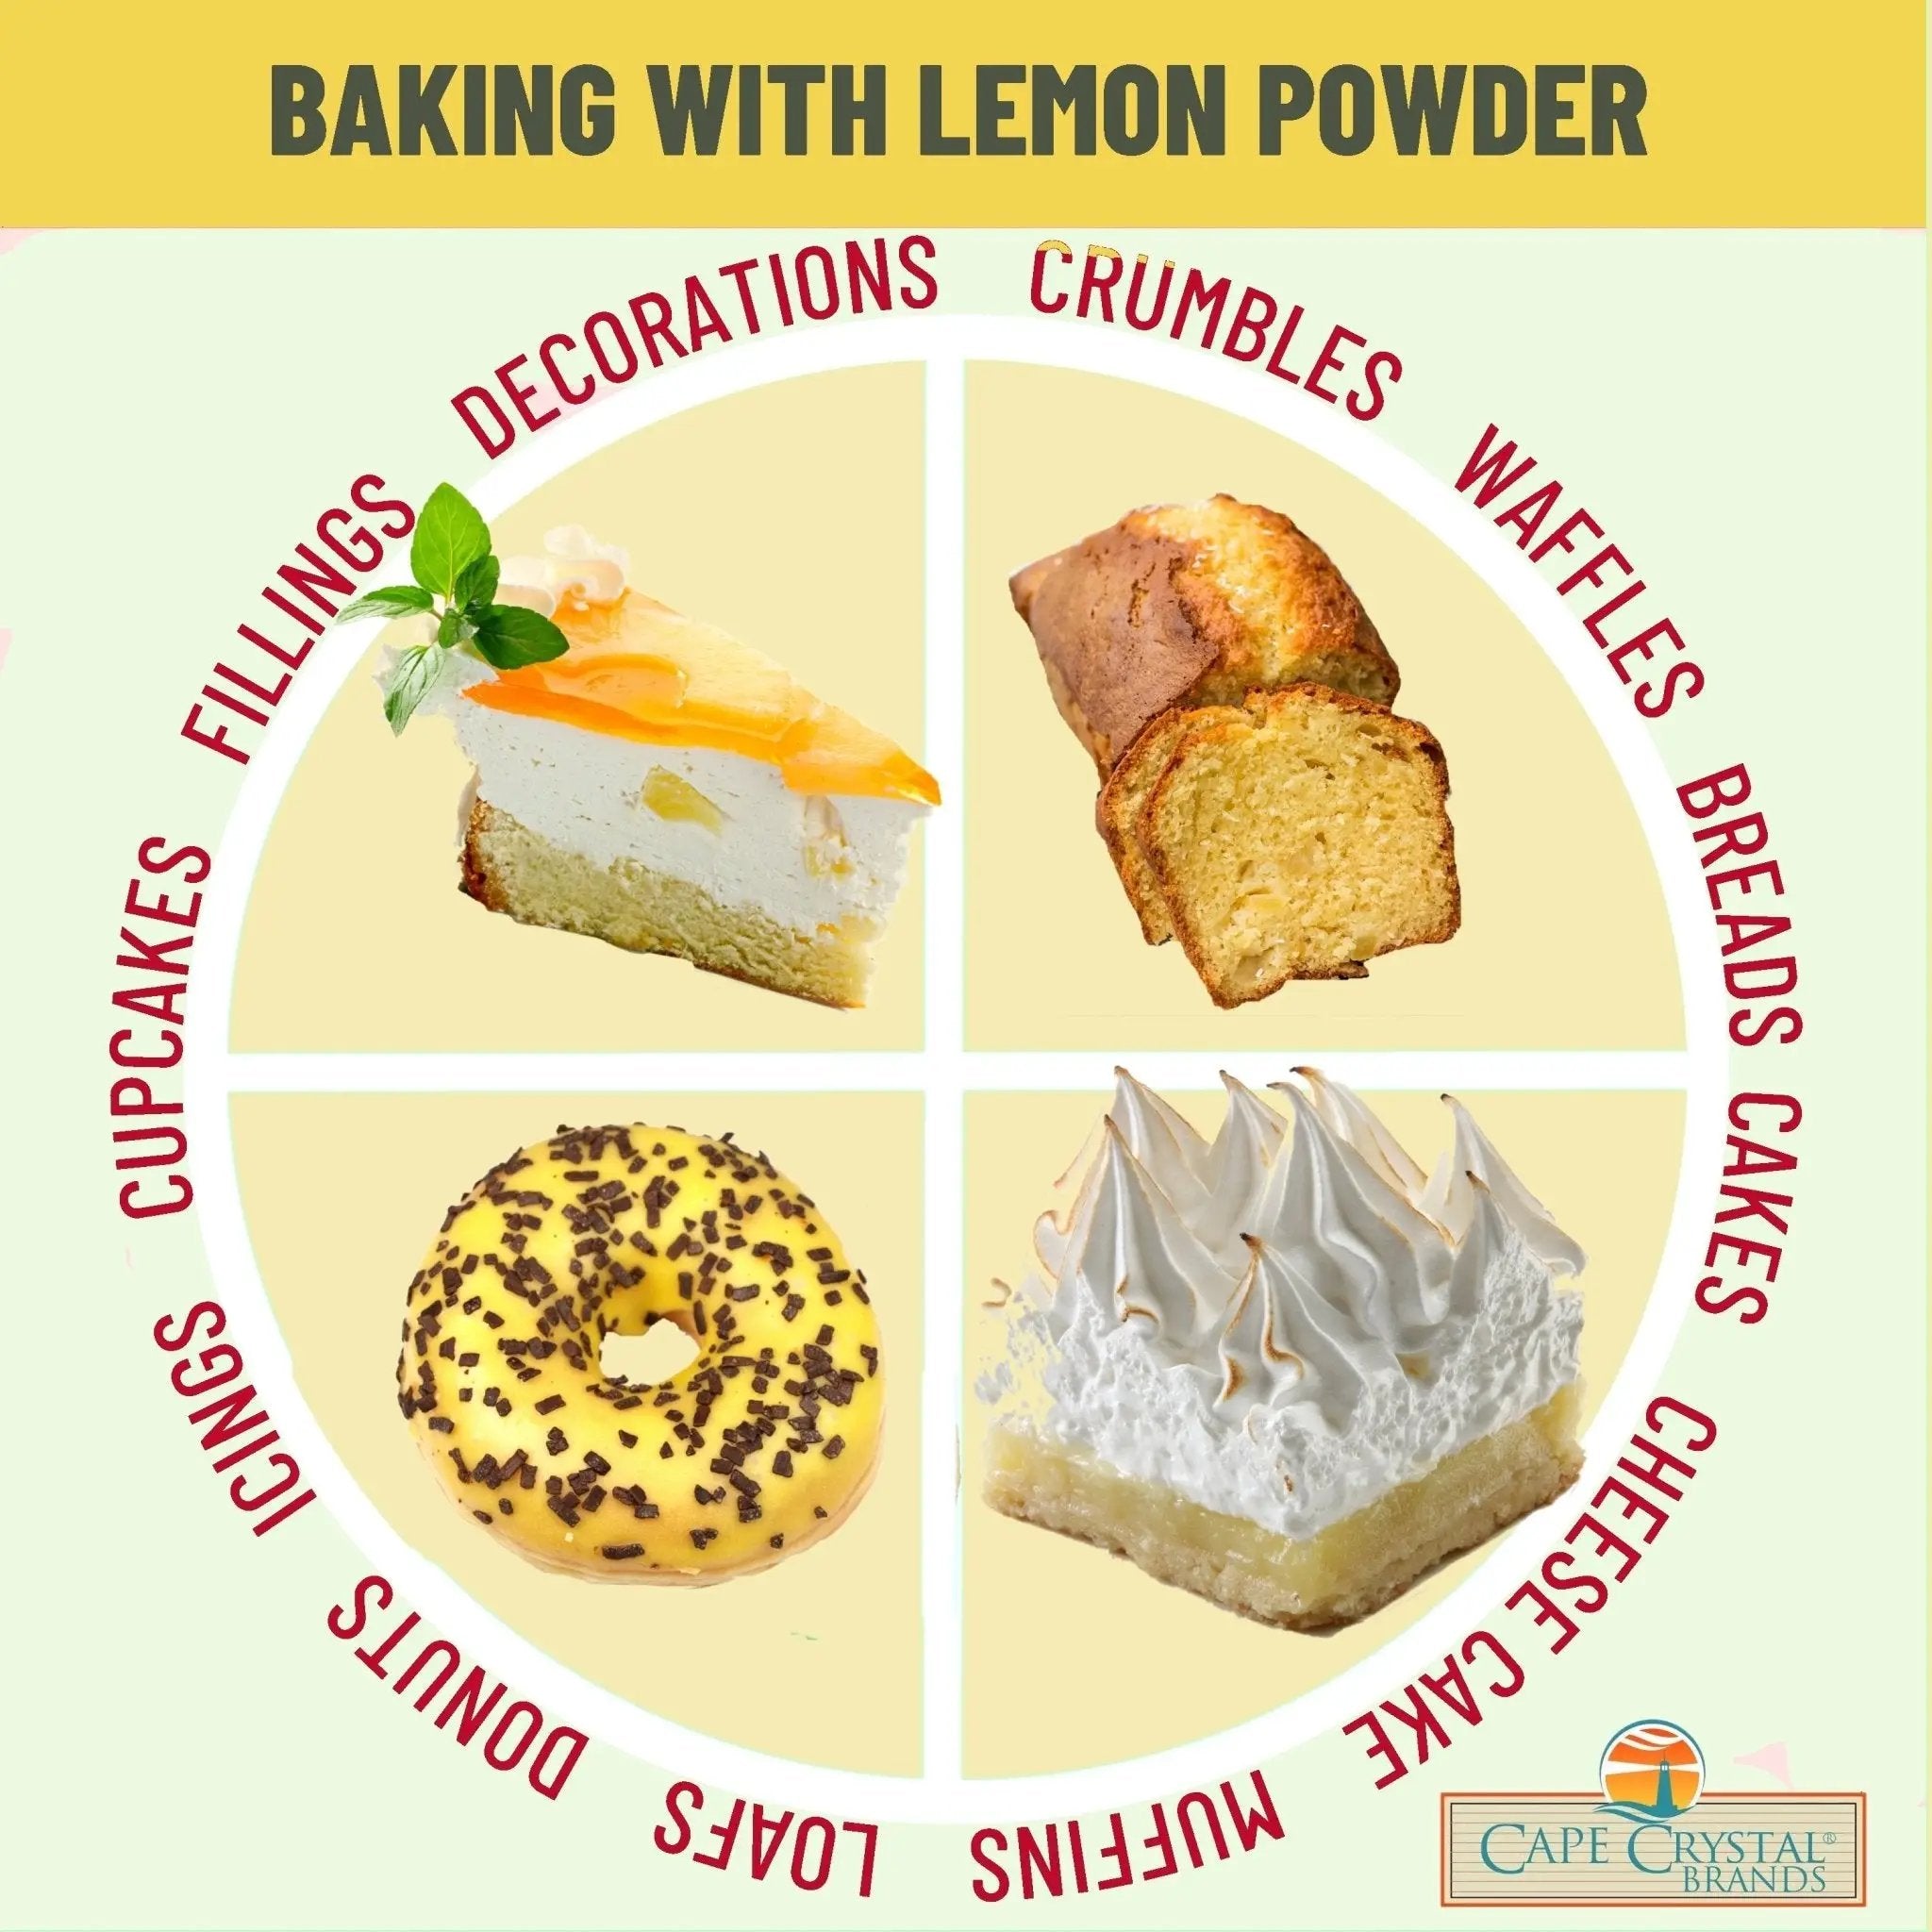 Cape Crystal Lemon Powder Goodness – 8-oz., Freeze-Dried for Superior Taste, USDA Certified Organic, Non-GMO, Gluten Free, Vegan - Cape Crystal Brands